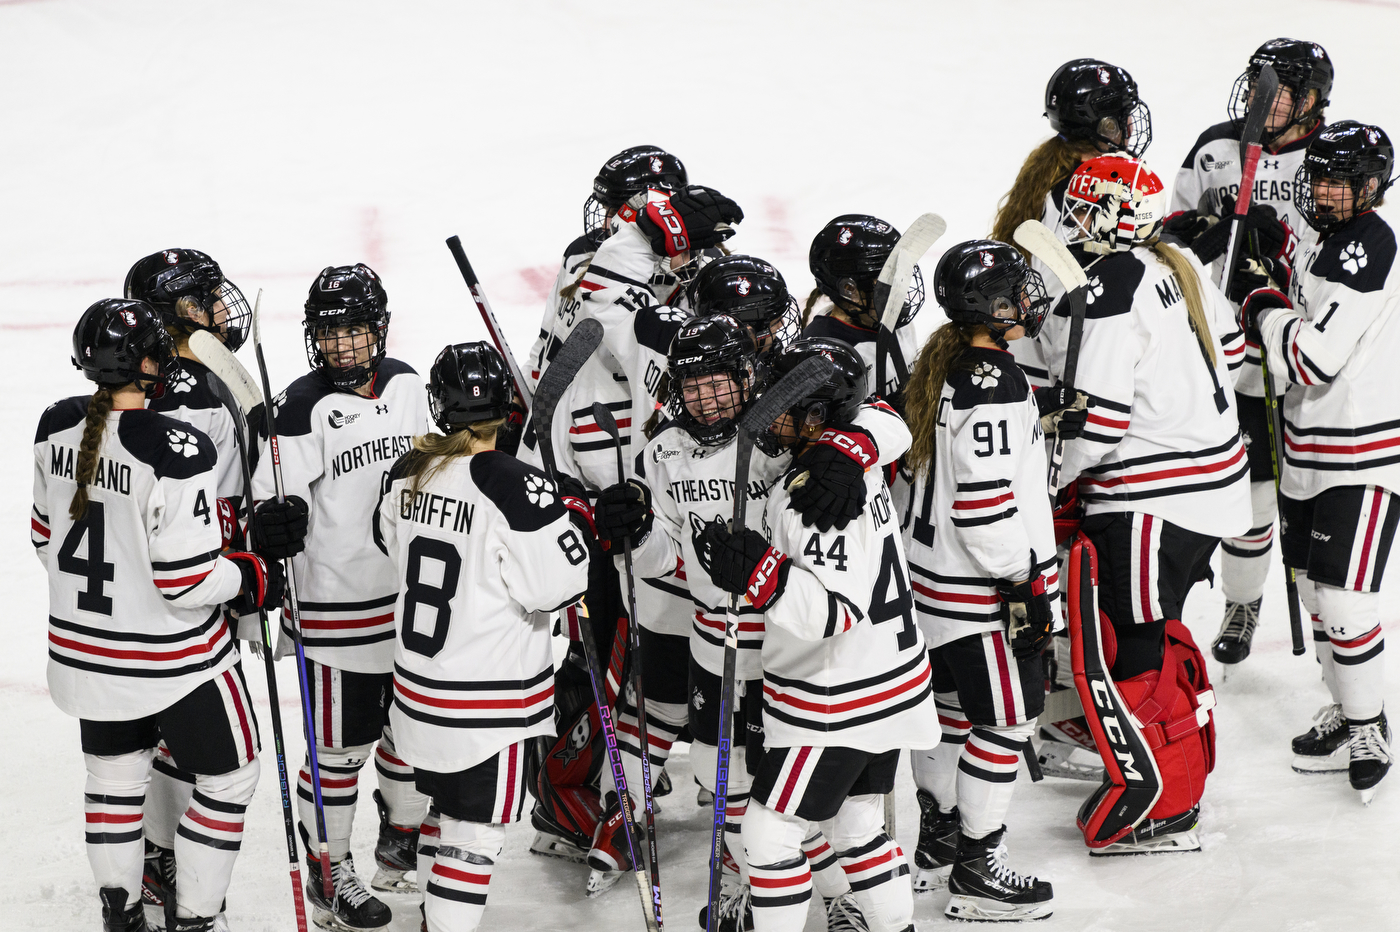 northeastern womens hockey team crowds together in celebration